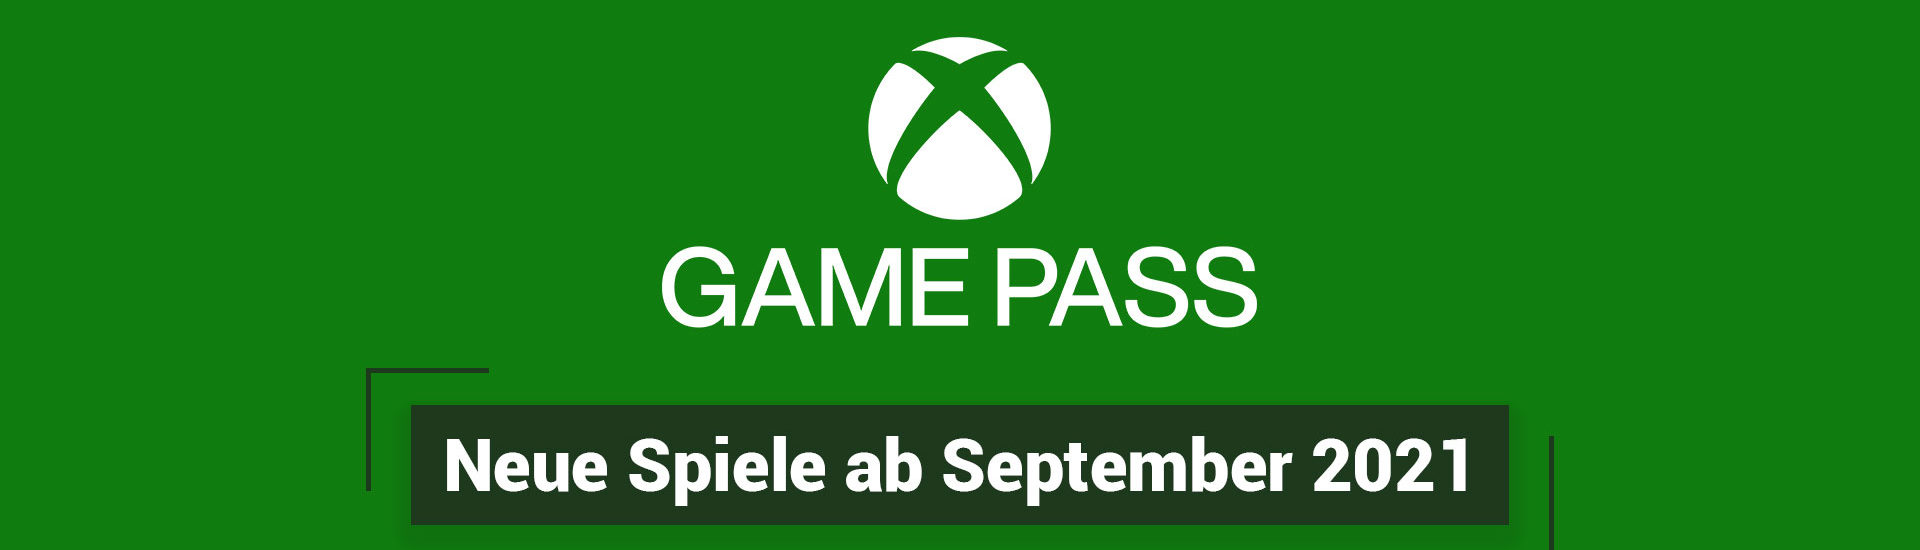 Xbox Game Pass: Neue Spiele ab September 2021